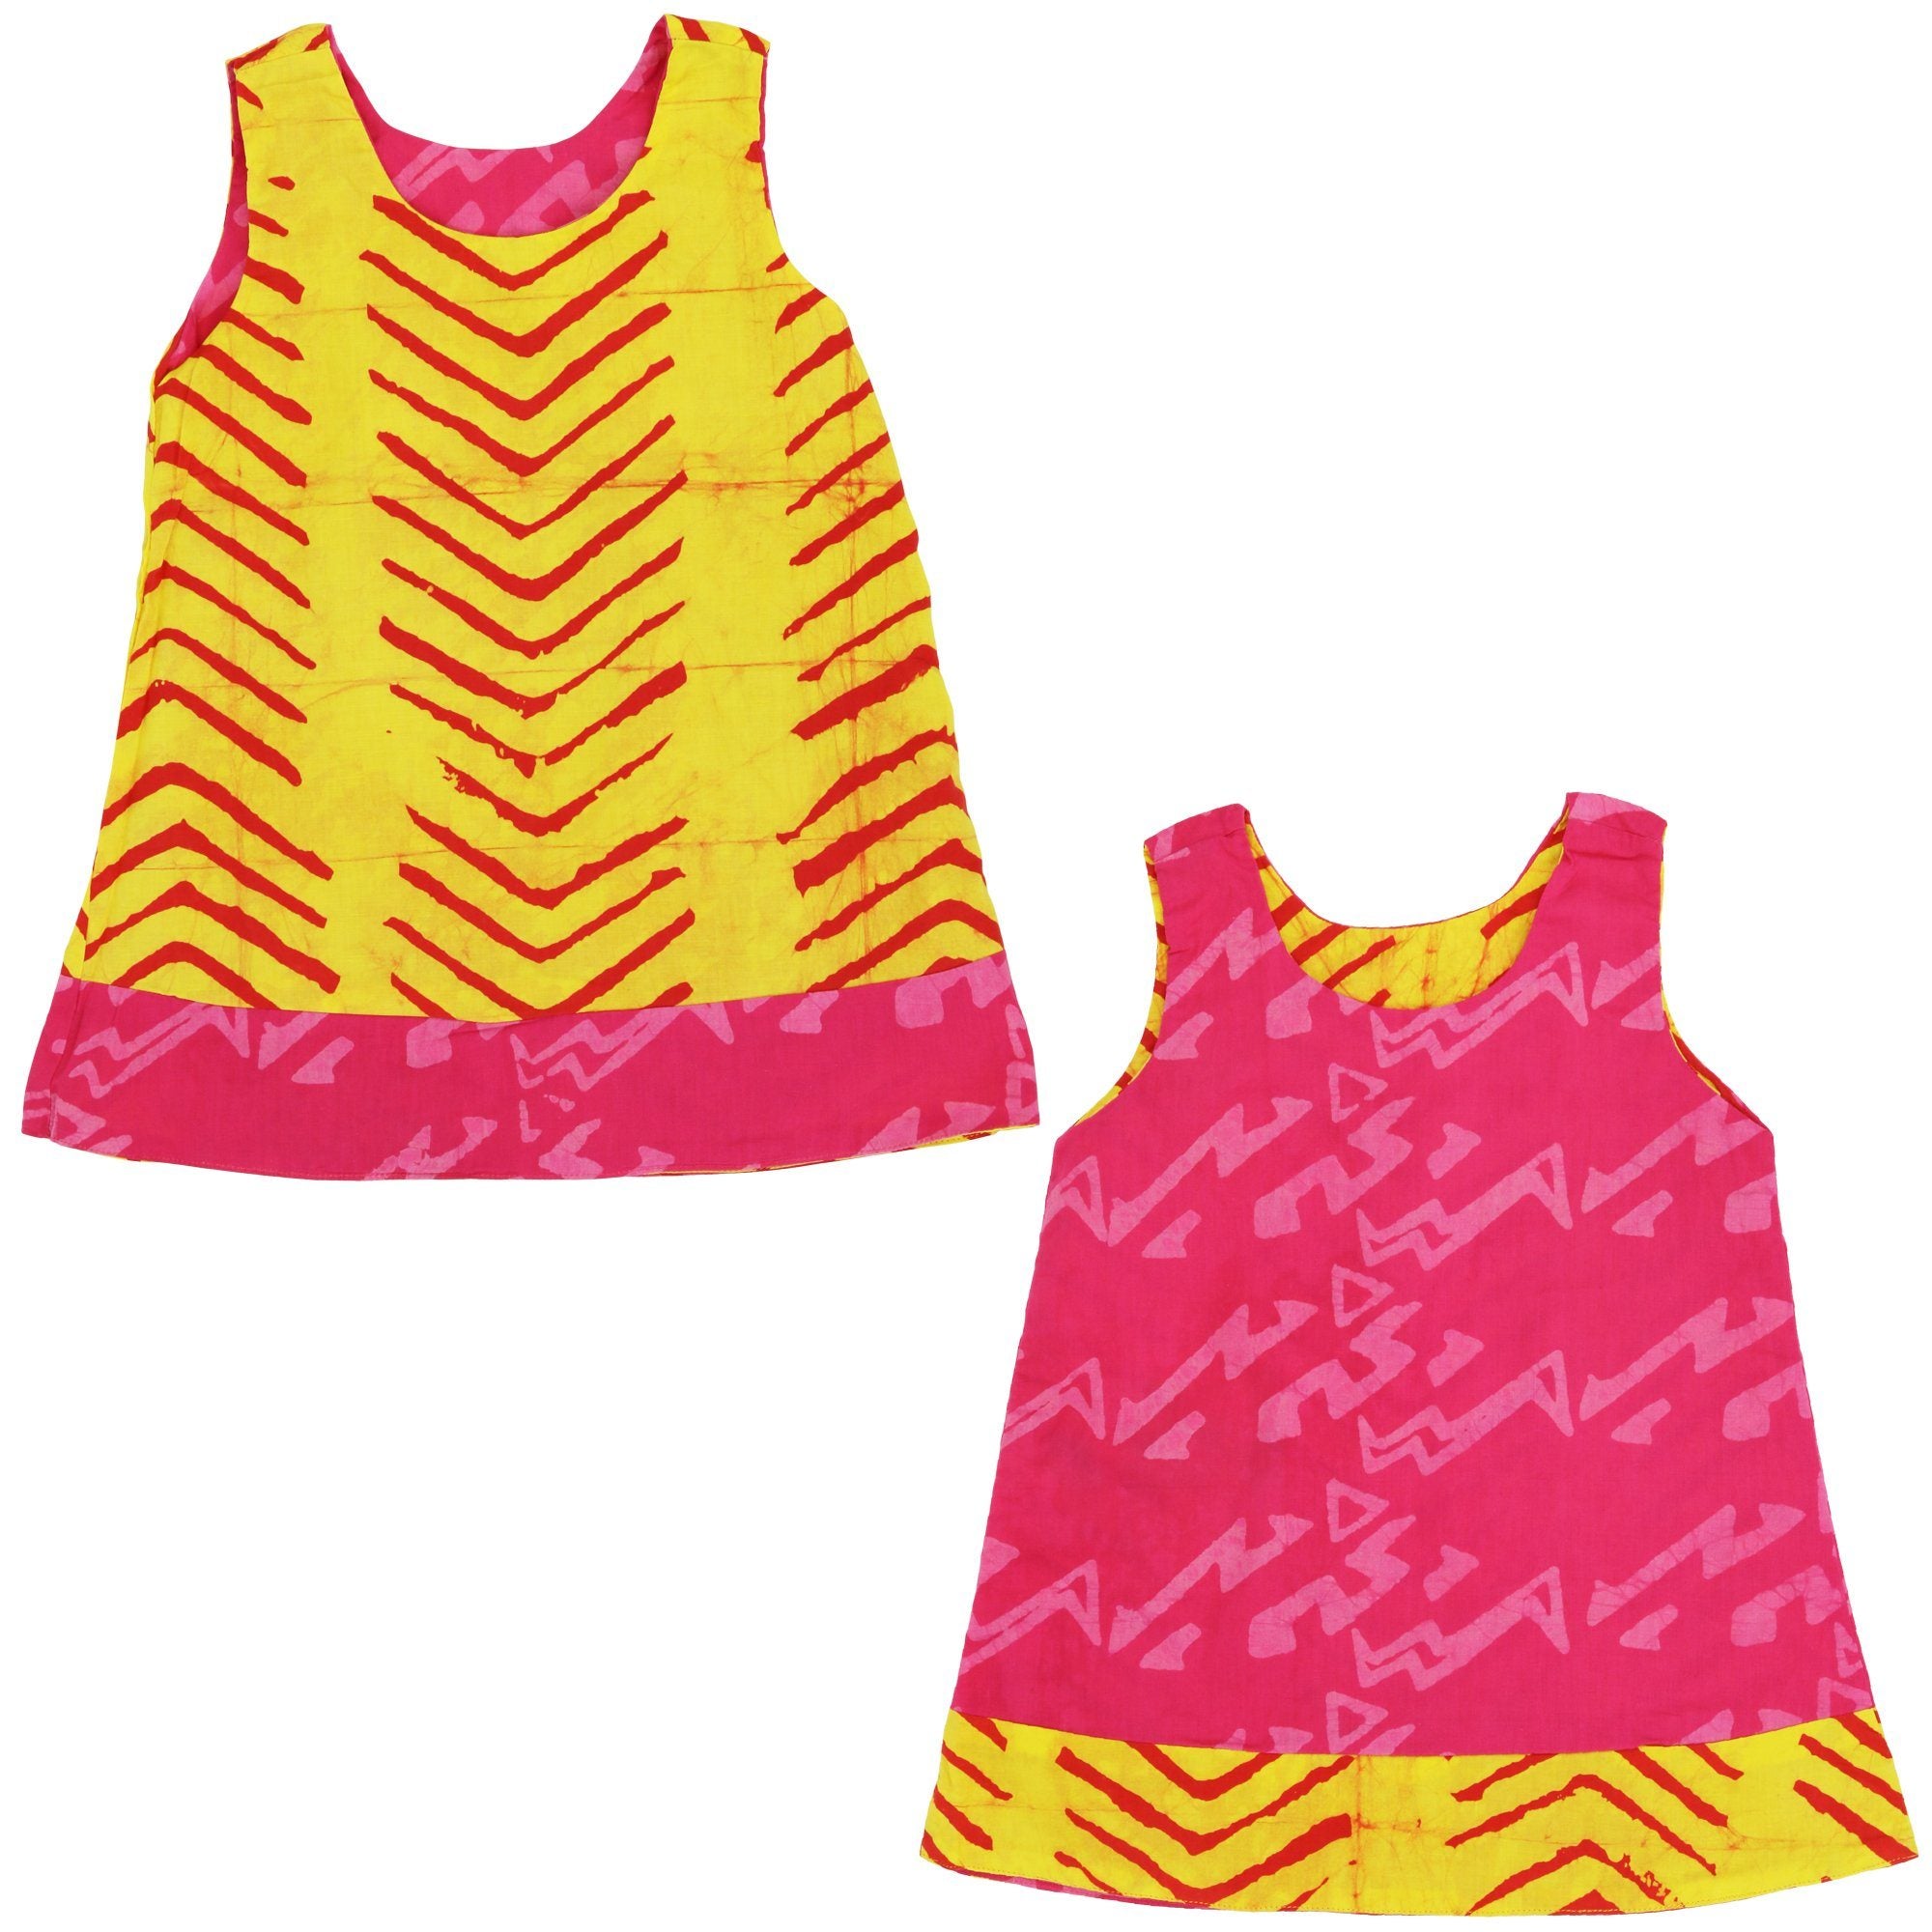 Ghana Batik Girls' Reversible Dress - Hot Pink Zig Zag - 18 Months